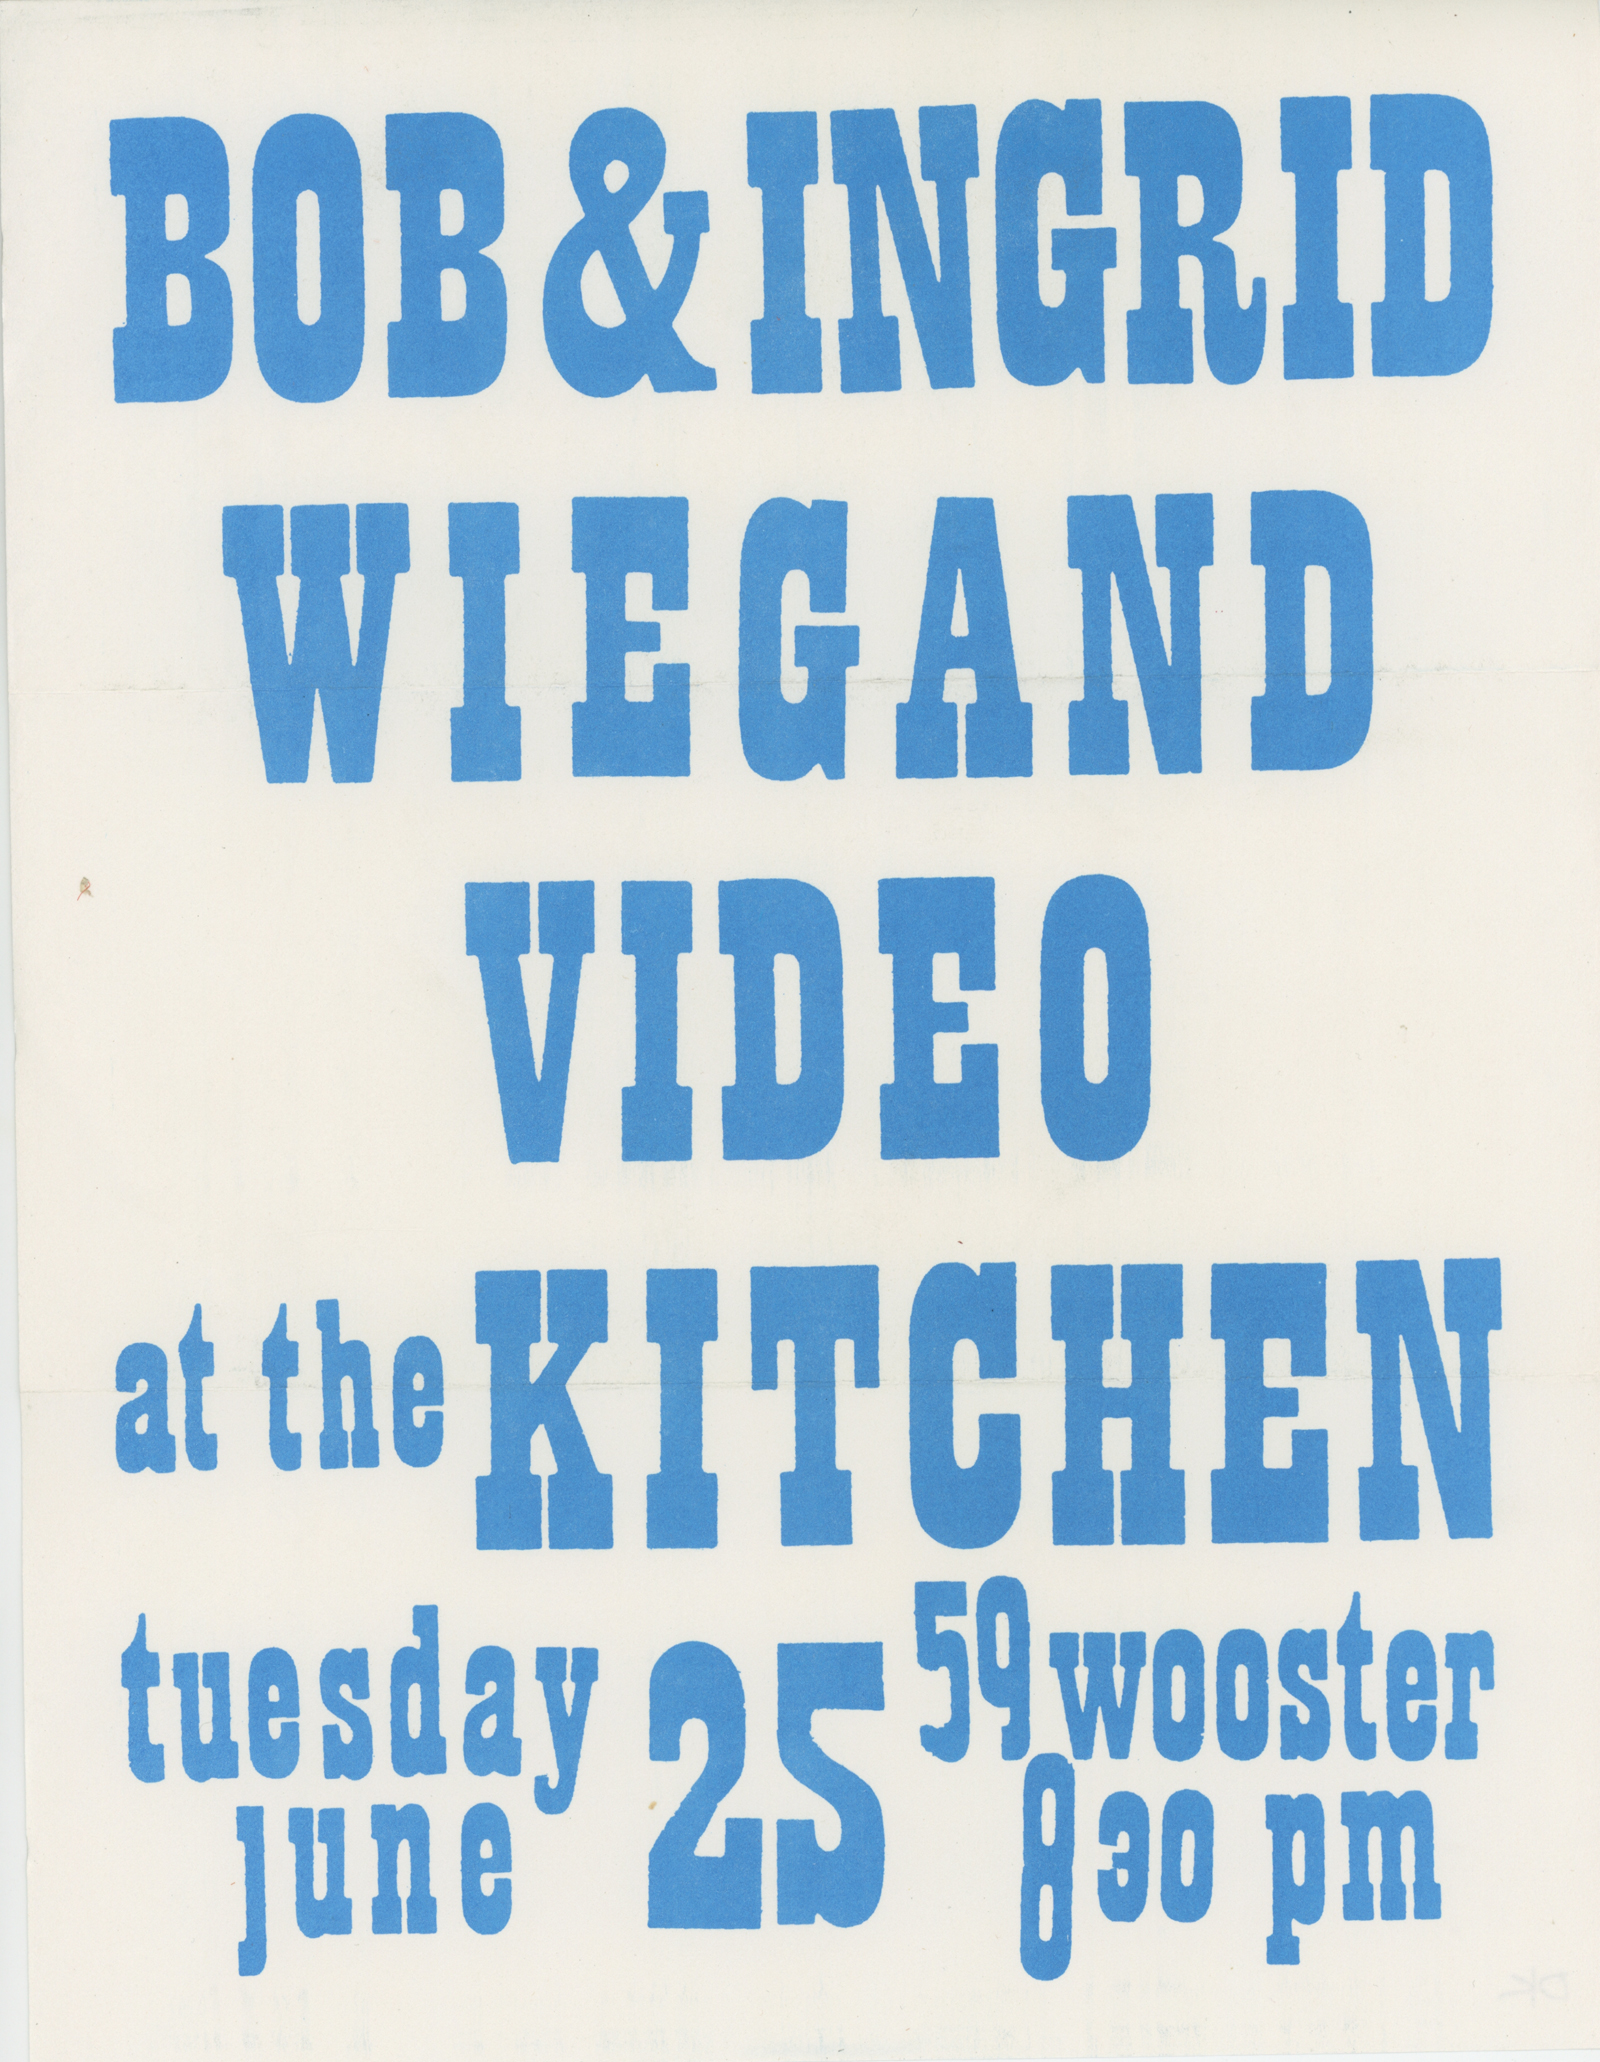 Bob & Ingrid Wiegand Video at the Kitchen